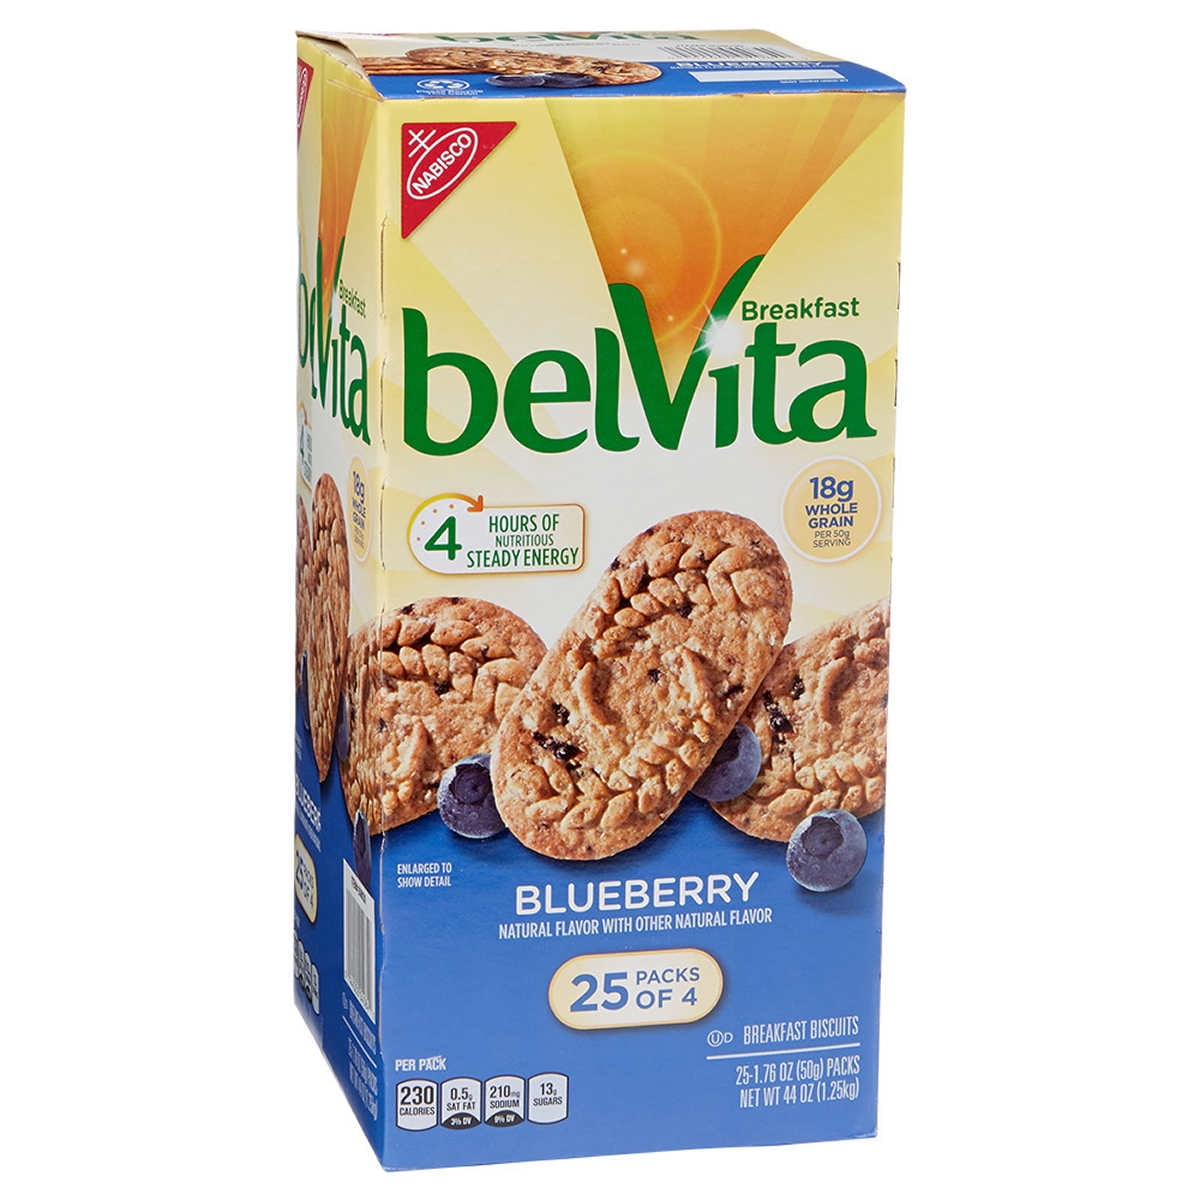 Belvita bar nutrition